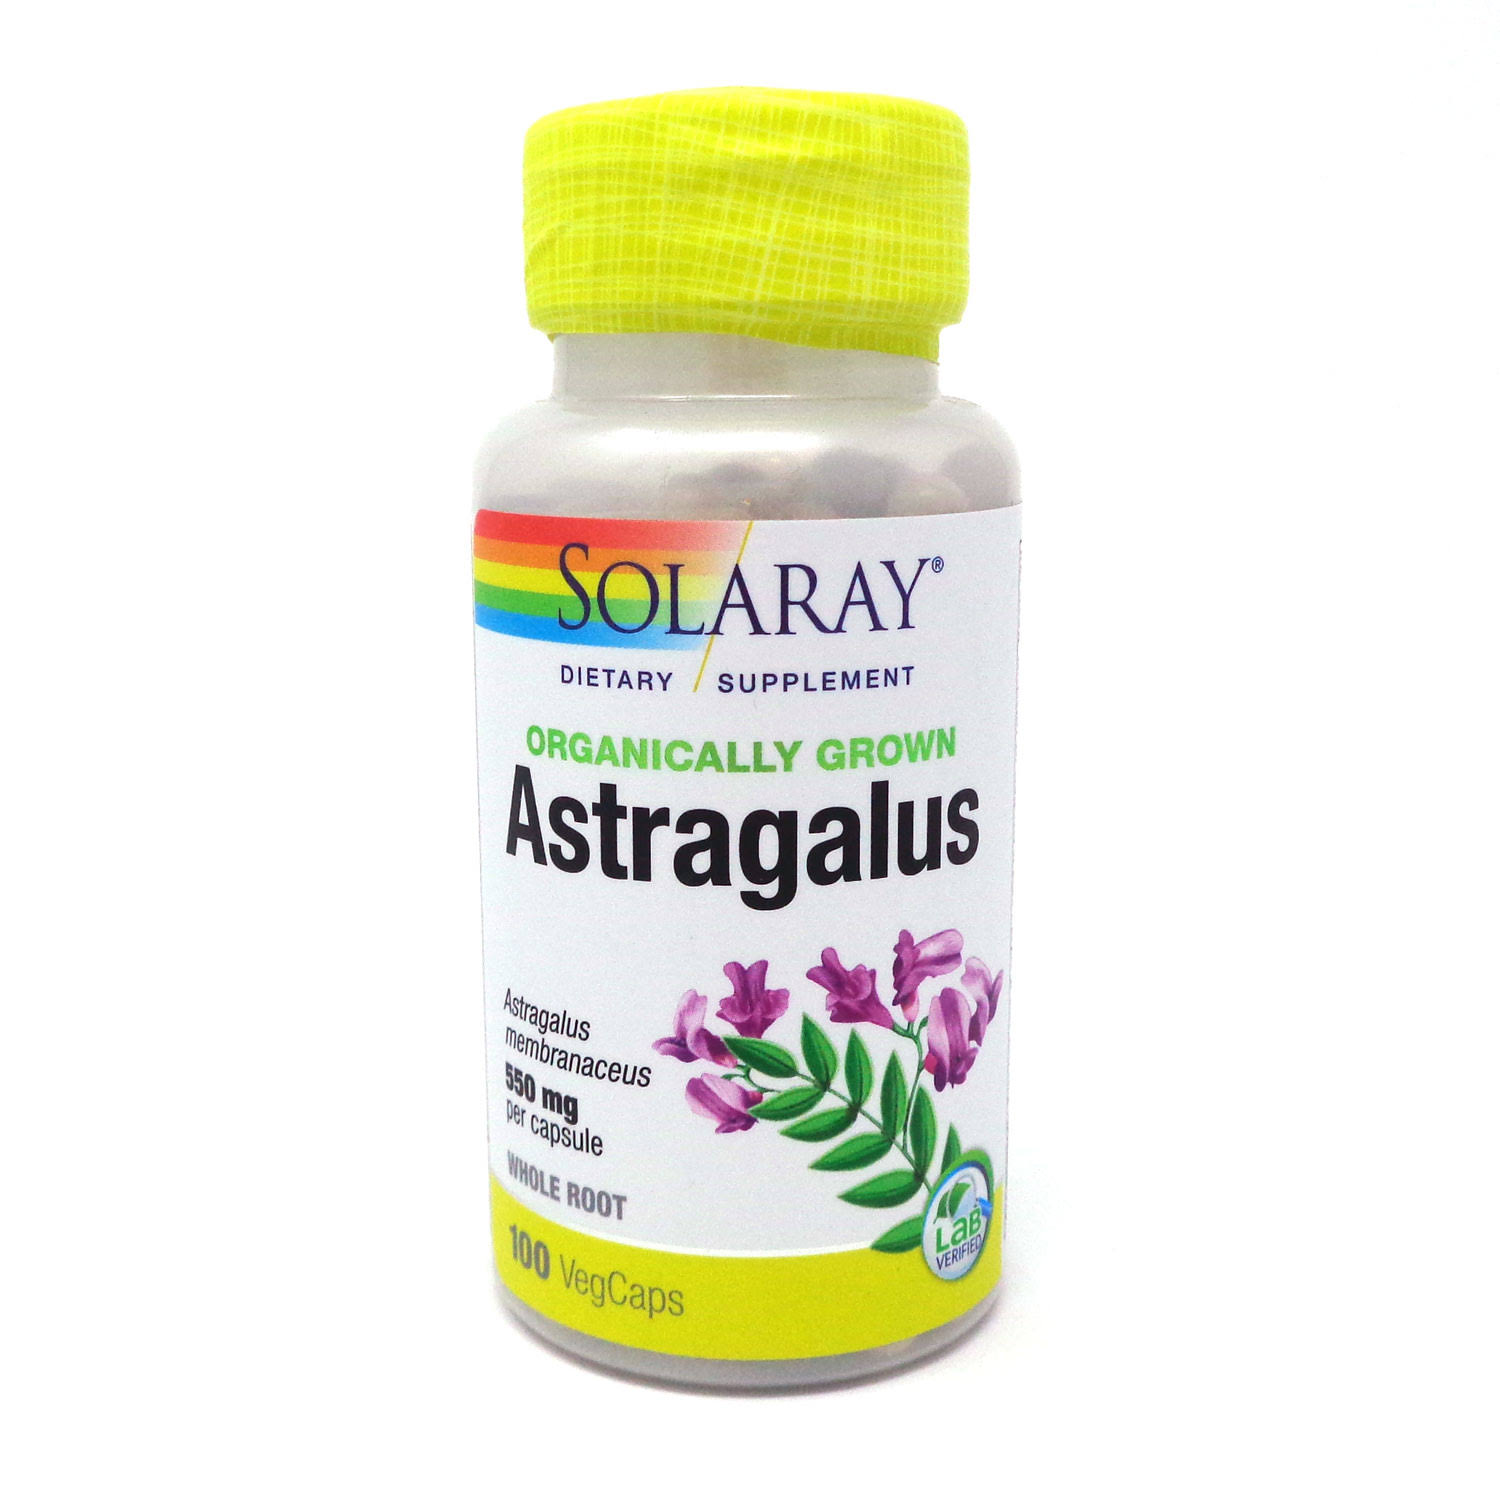 Solaray Organically Grown Astragalus 550 mg - 100 VegCaps